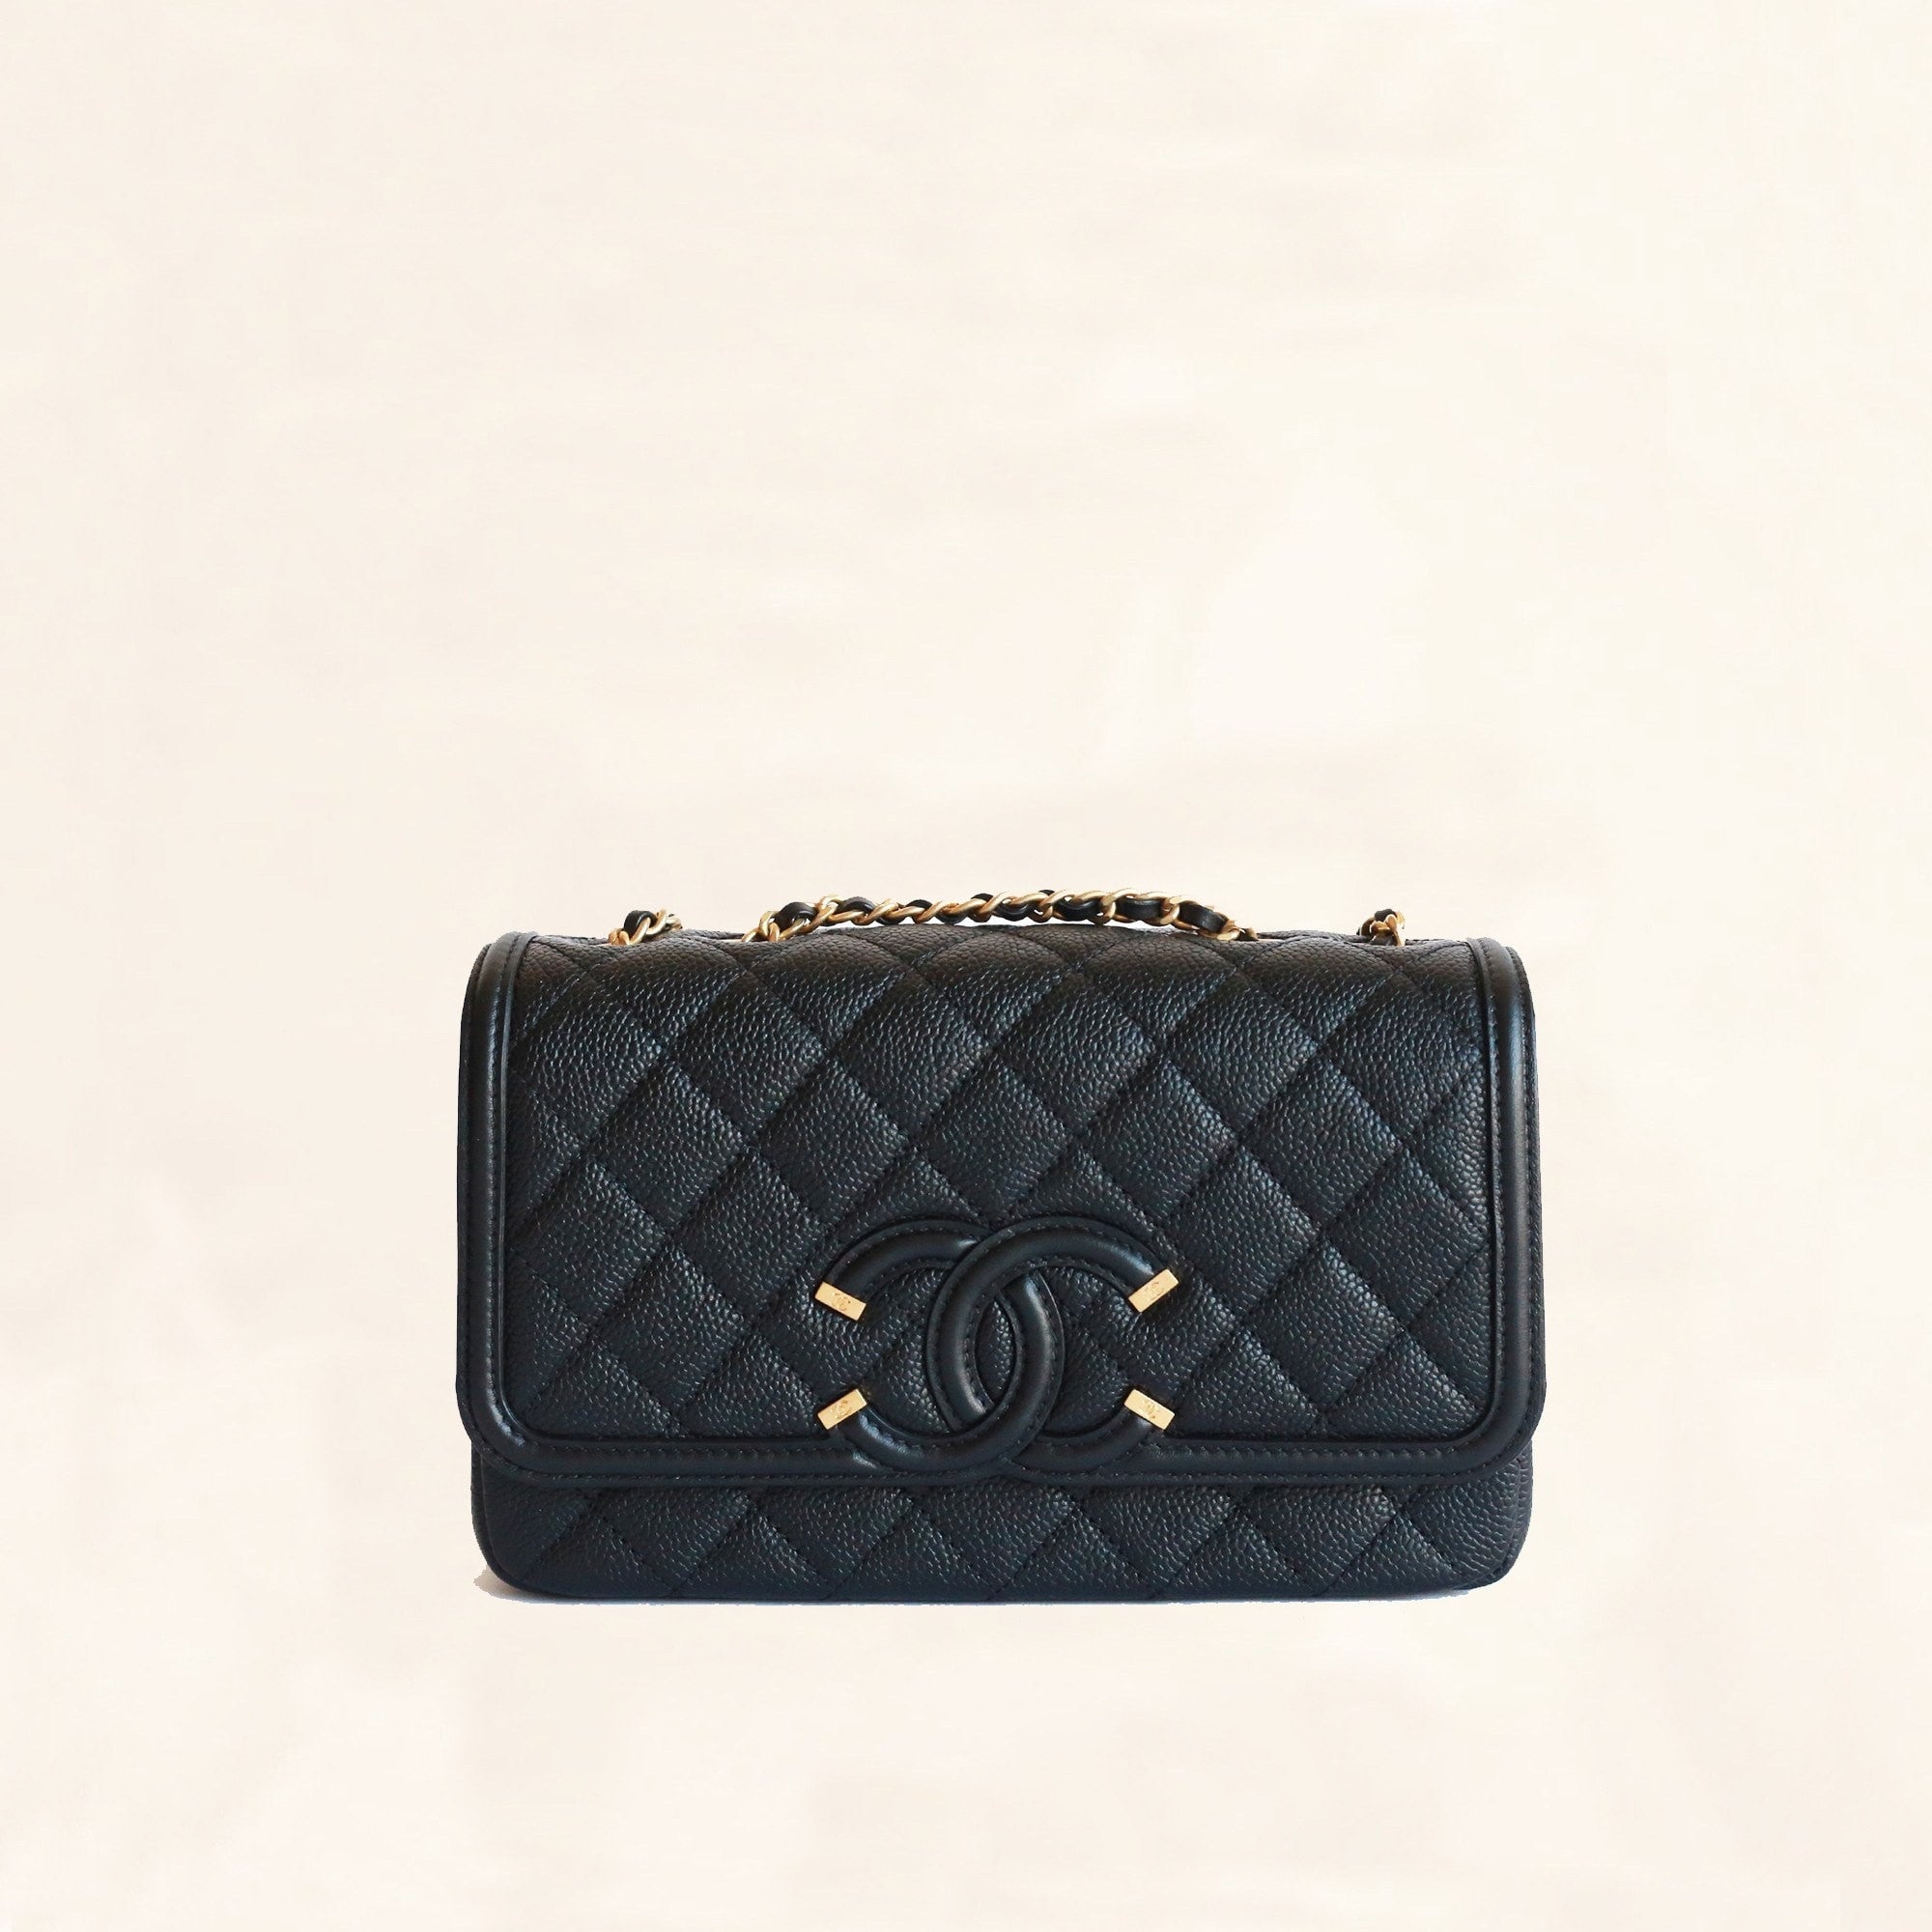 Chanel Mini Flaps Comparison CaviarLambskin Leather  Wear  Tear  Pick  Your First Chanel Handbag  YouTube